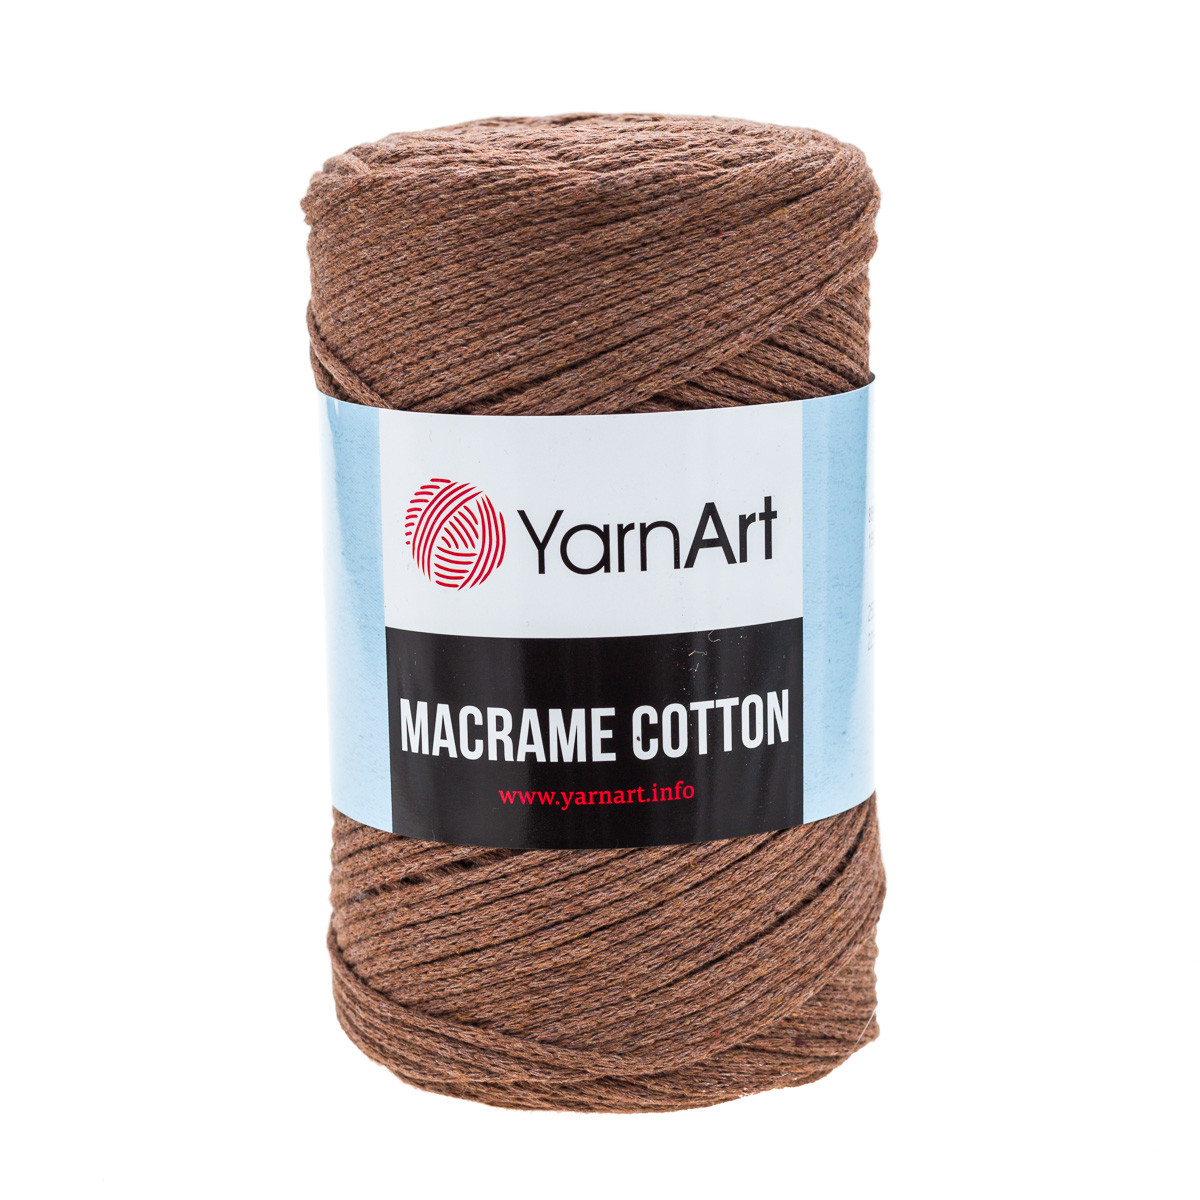 Хлопковый шнур Ярнарт Макраме Коттон (Yarnart Macrame Cotton) цвет 788 какао